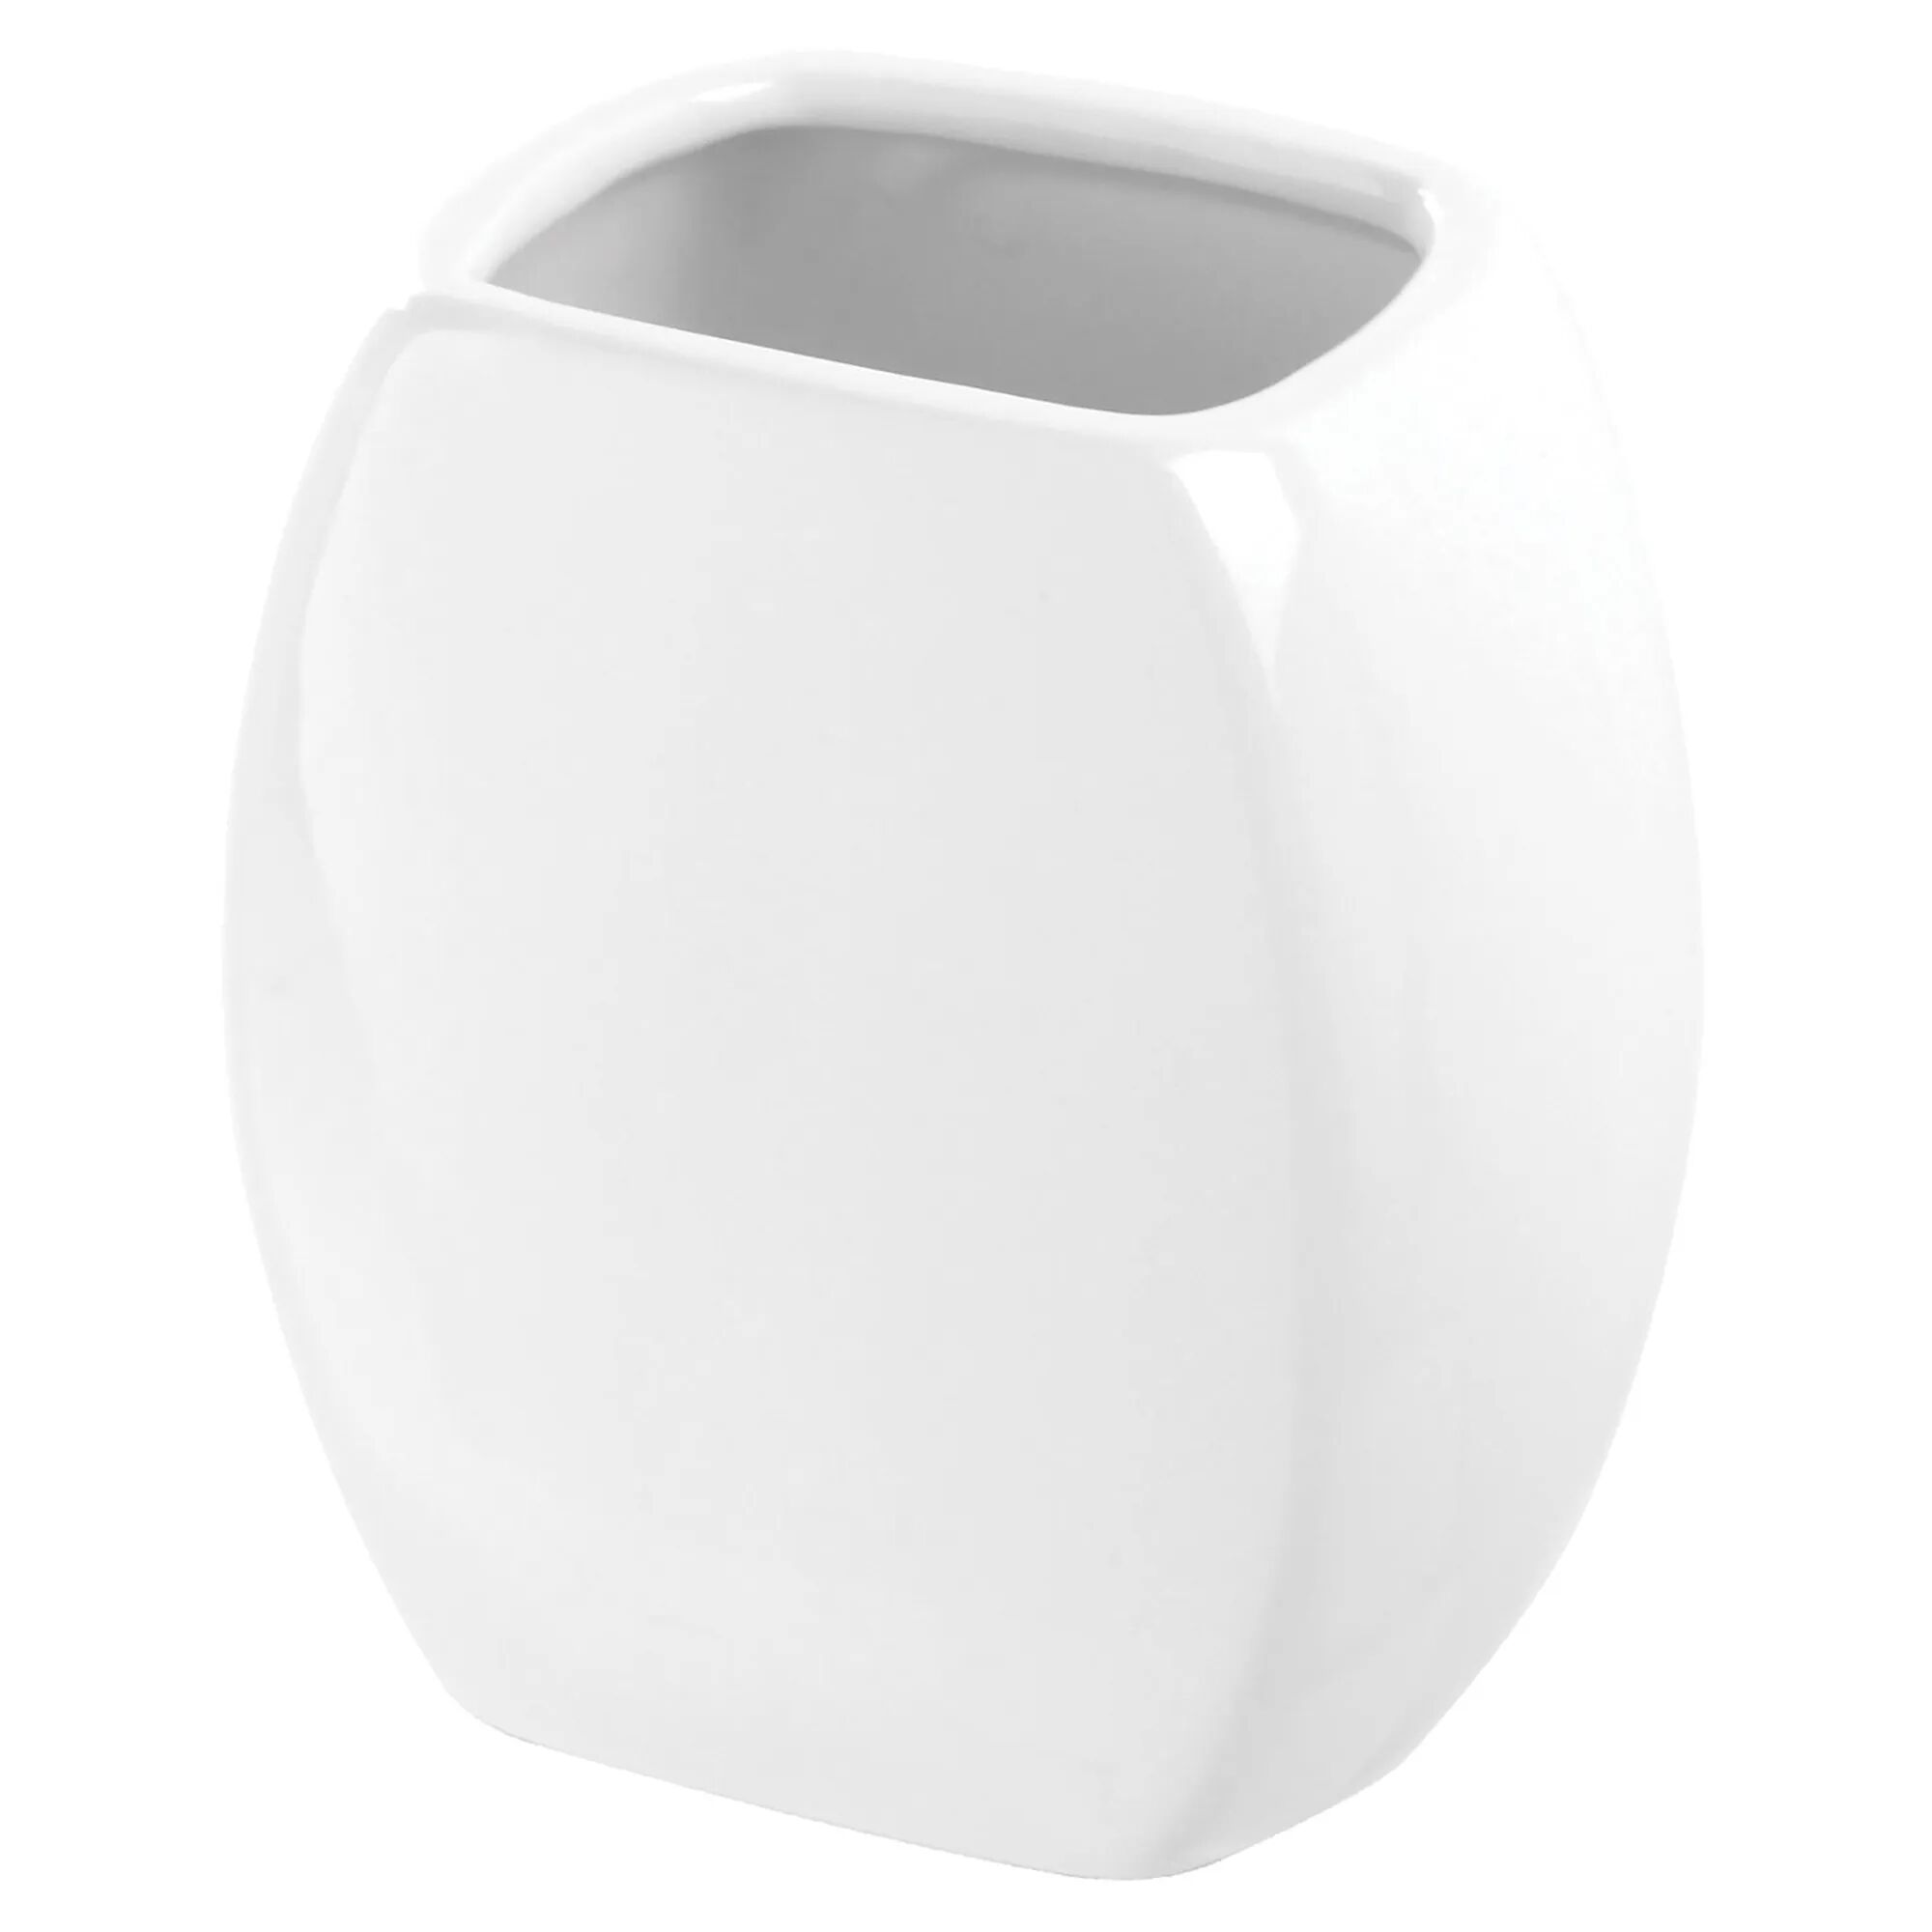 tecnomat porta spazzolino serie parigi in ceramica colore bianco